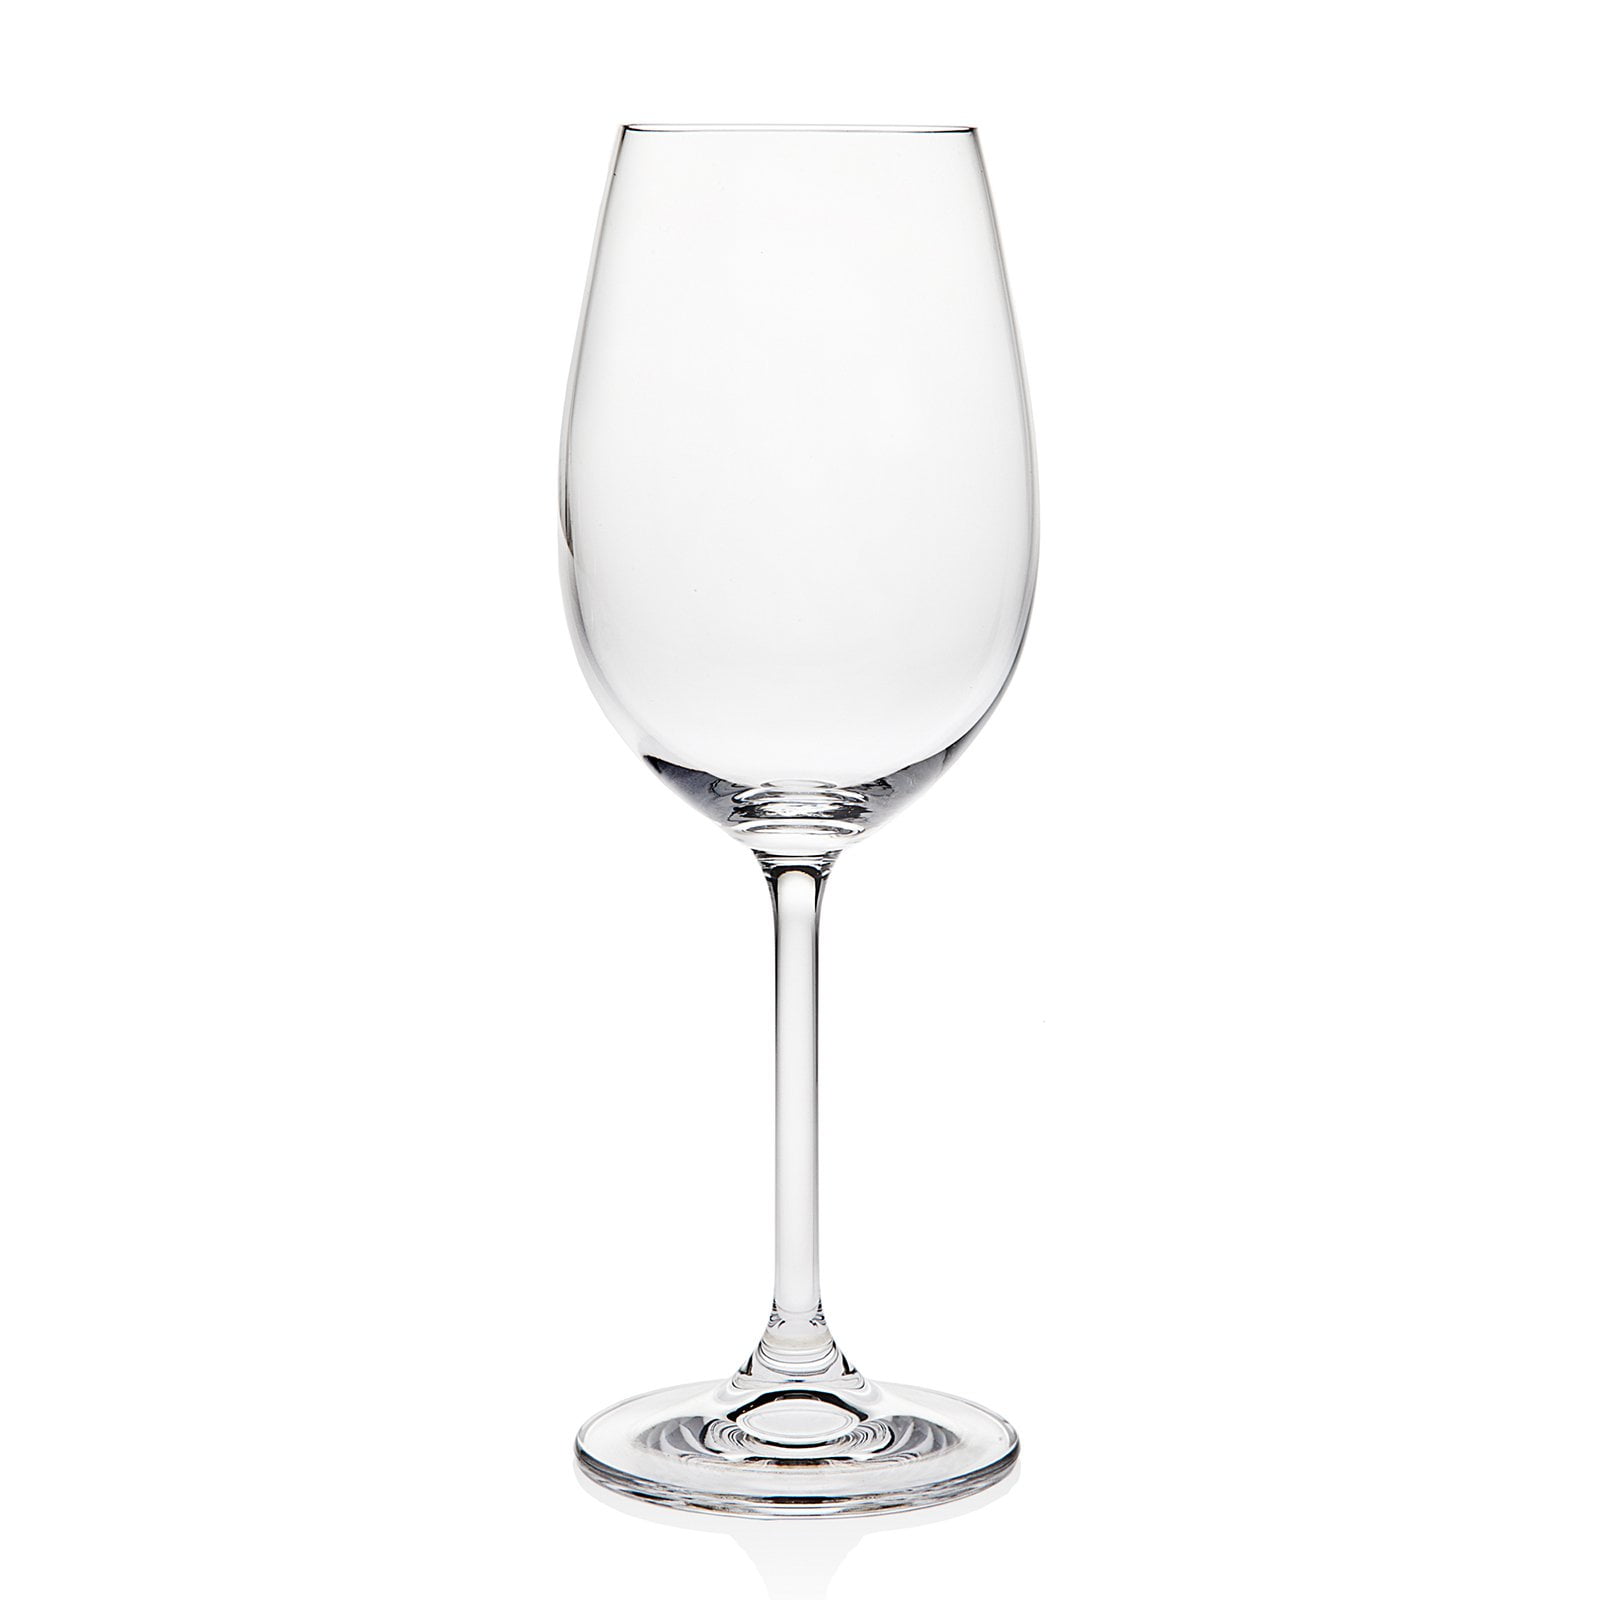 Godinger Crystal Meridian Stemless Wine Glasses, Set of 4